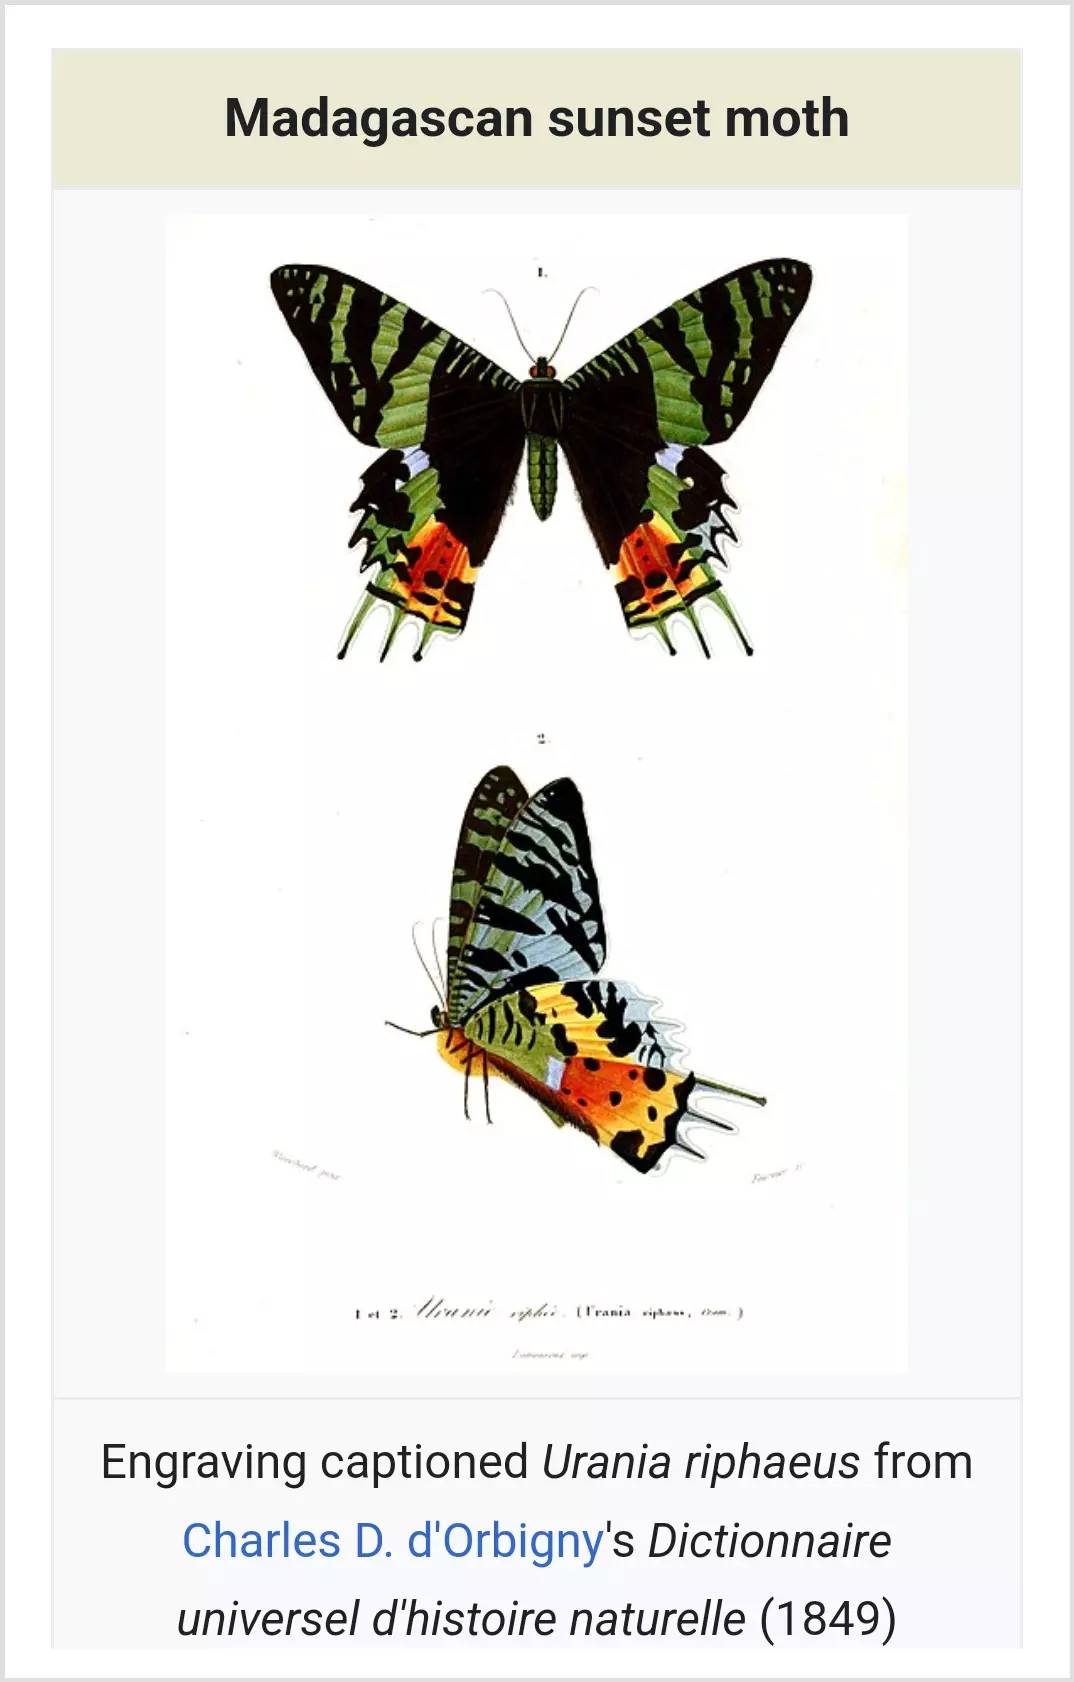 Chrysiridia rhipheus, atau Madagascan sunset moth